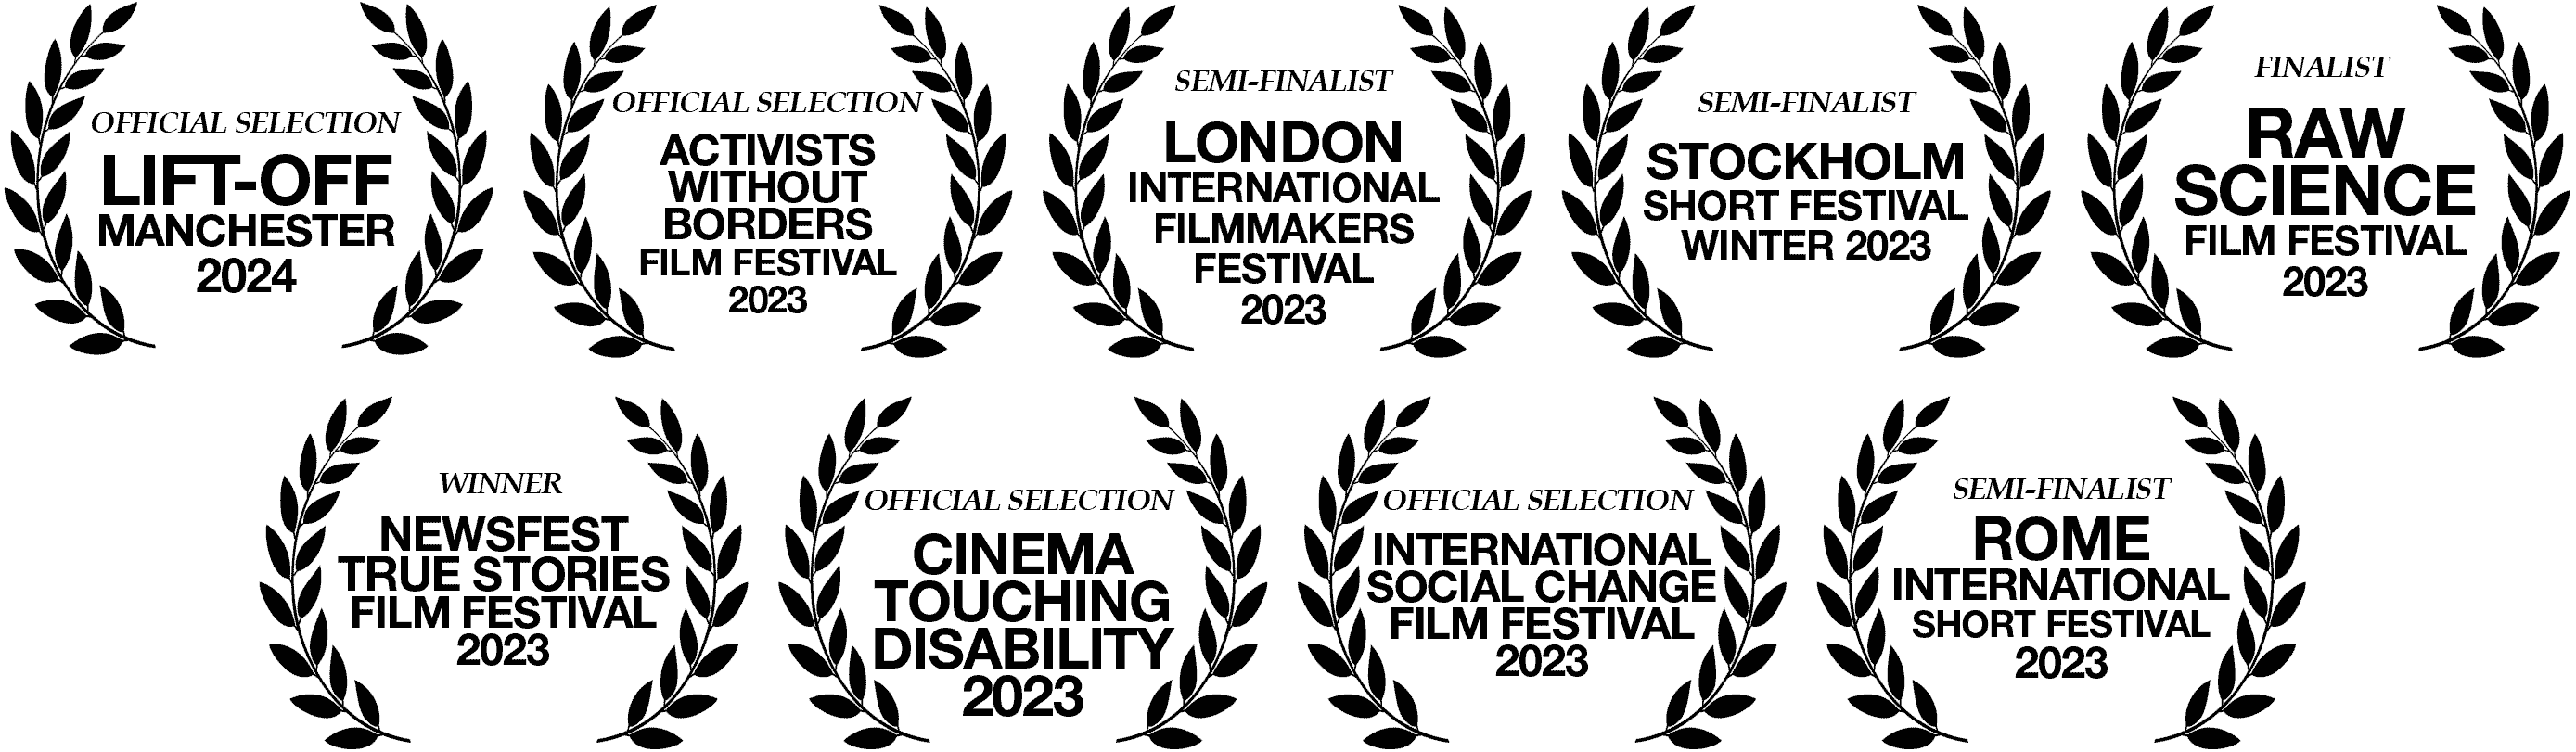 Film festival laurels